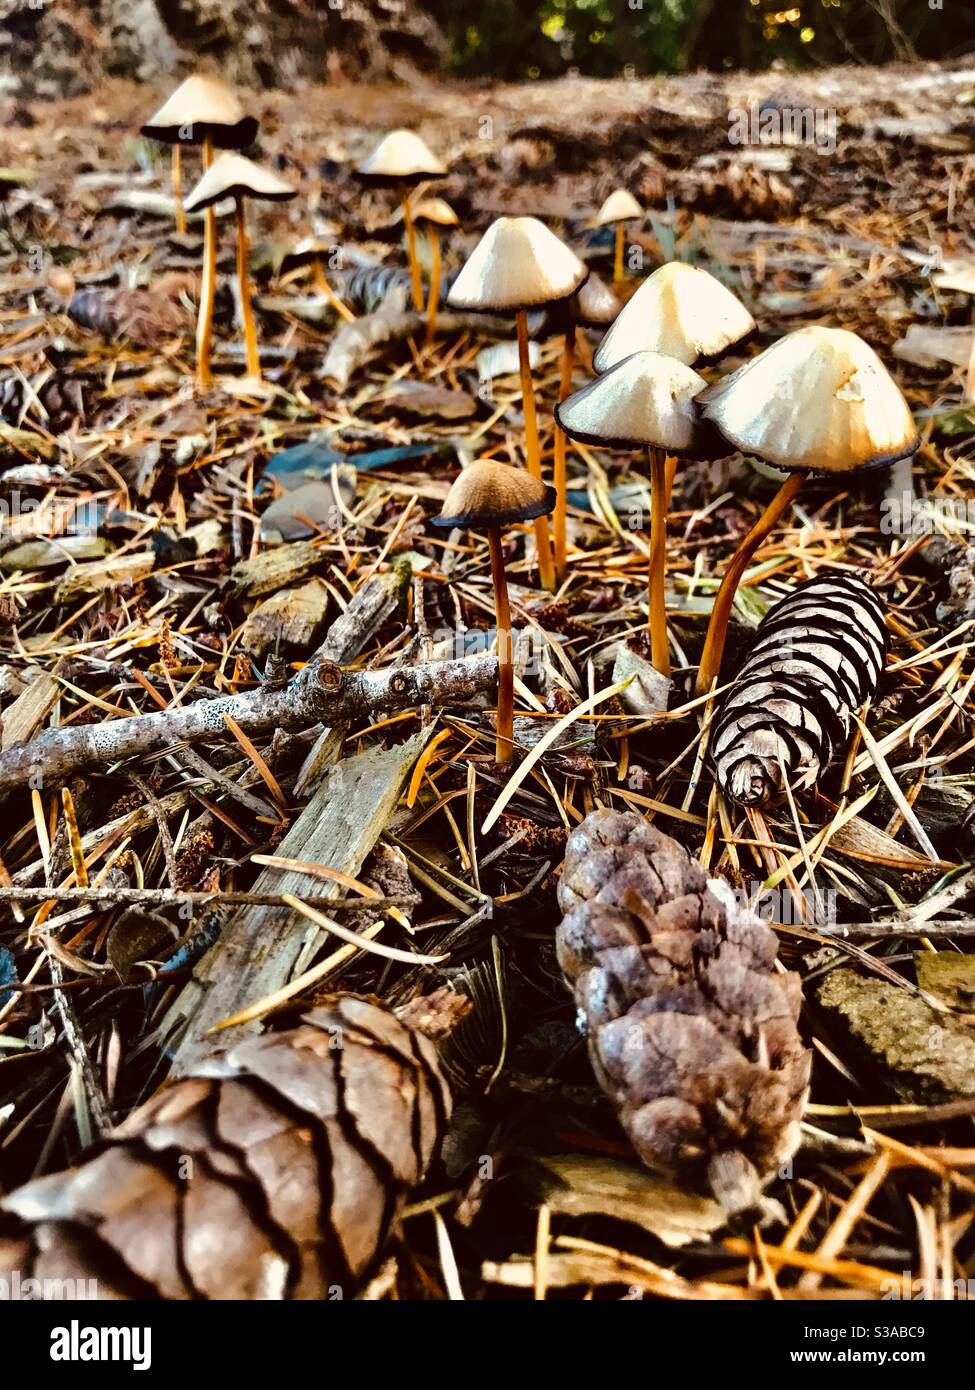 Mushrooms, fungi & pine cones on the forest floor Stock Photo